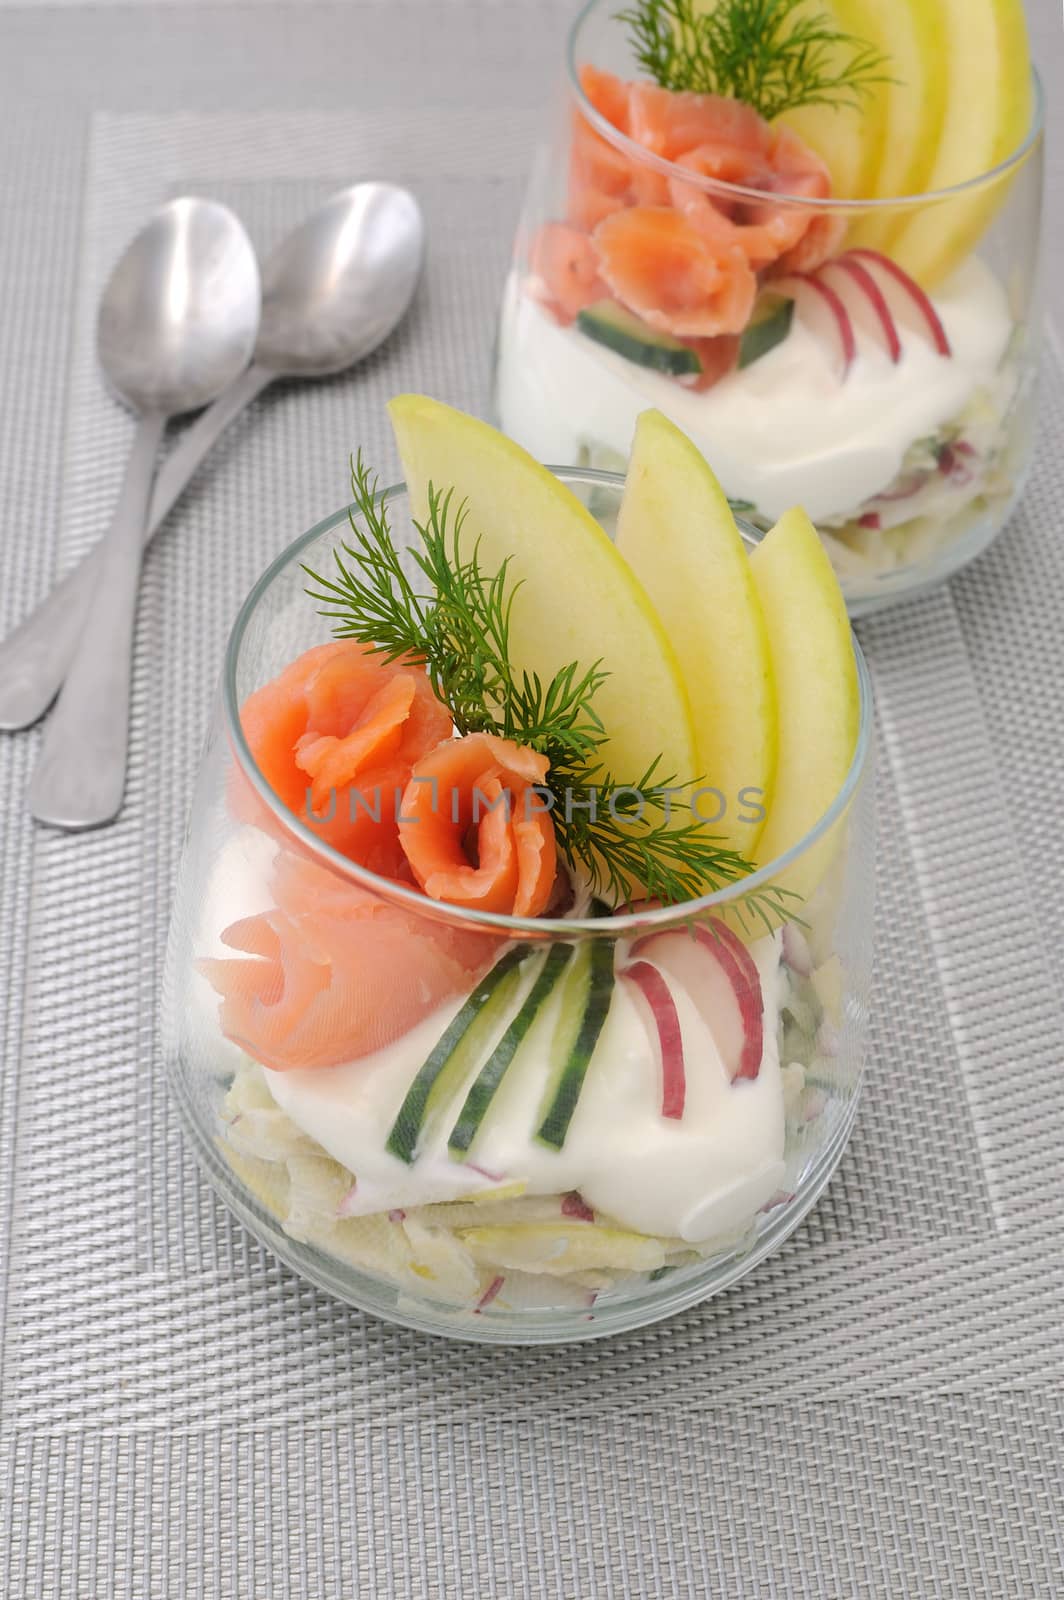 Verrin with apple, cucumber and radish for yogurt and smoked salmon